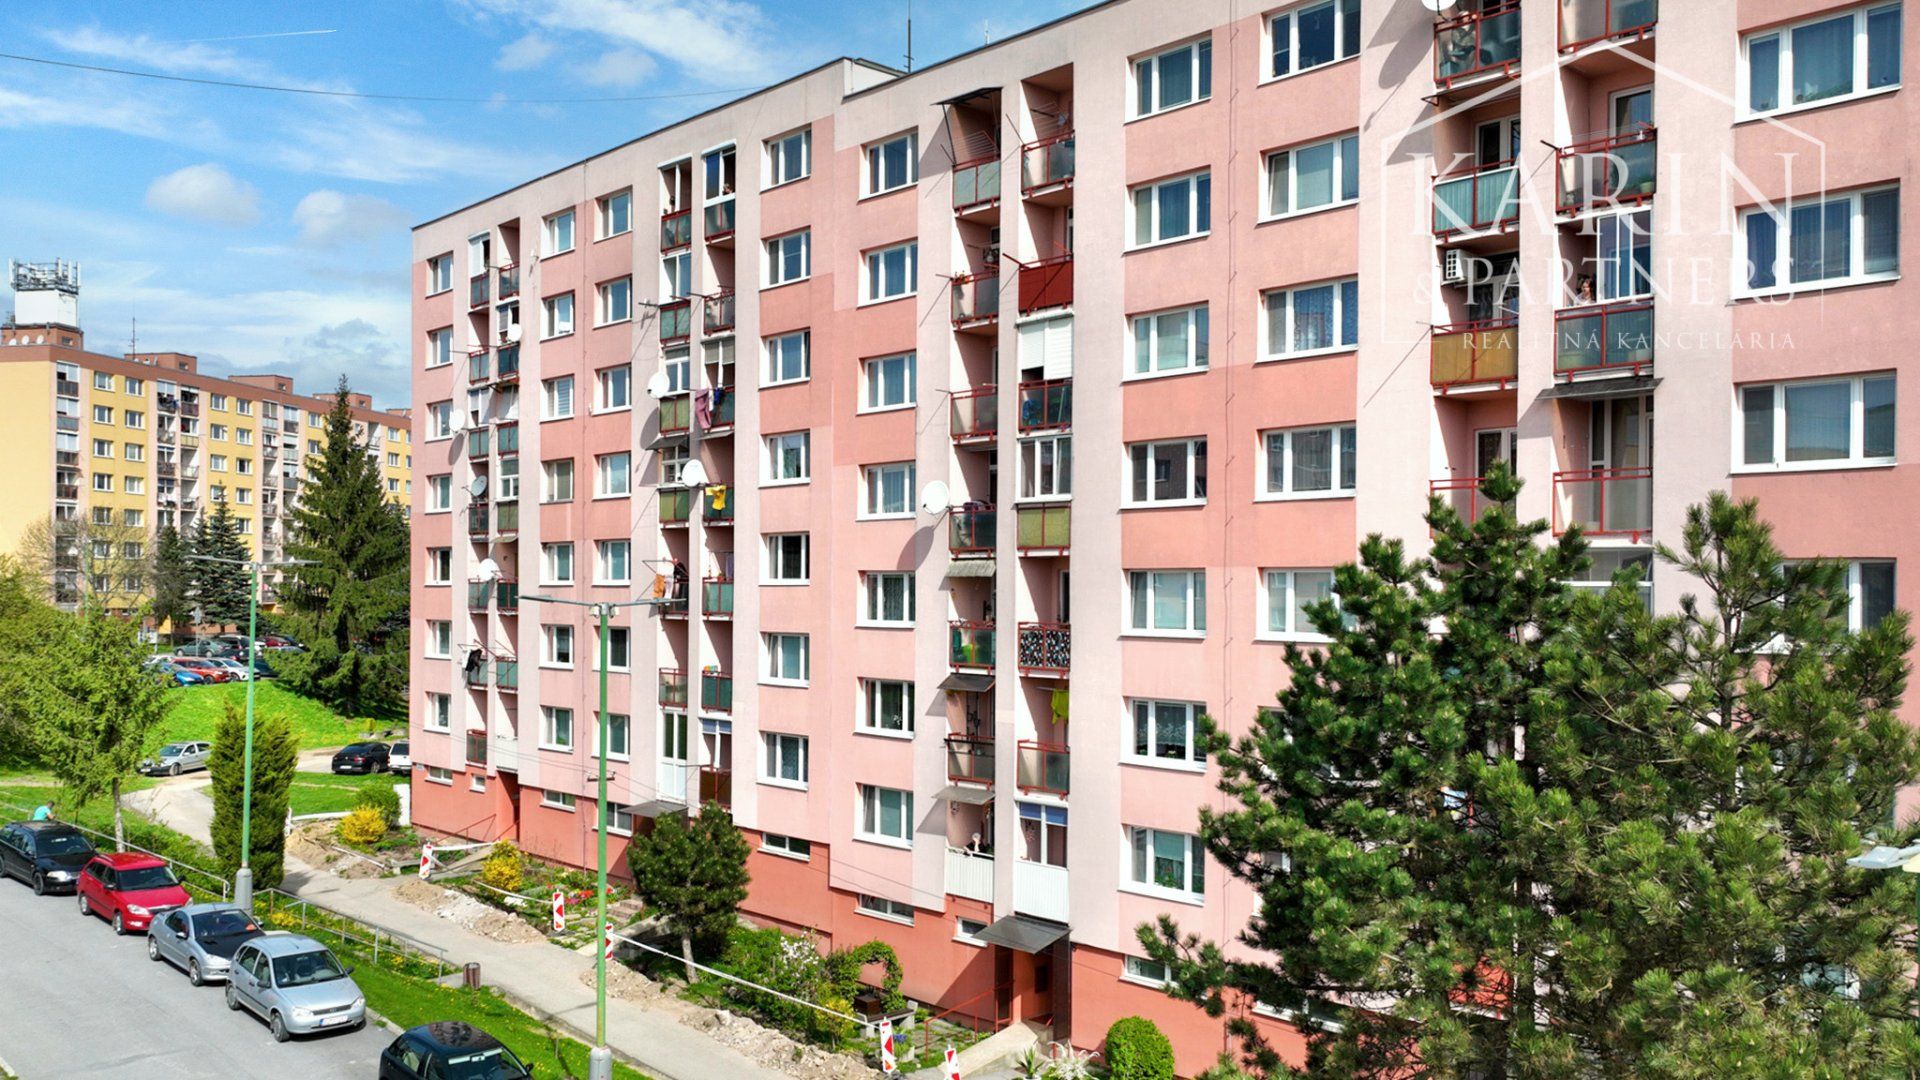 Pekný 3-izbový slnečný byt 64m2 Banská Štiavnica